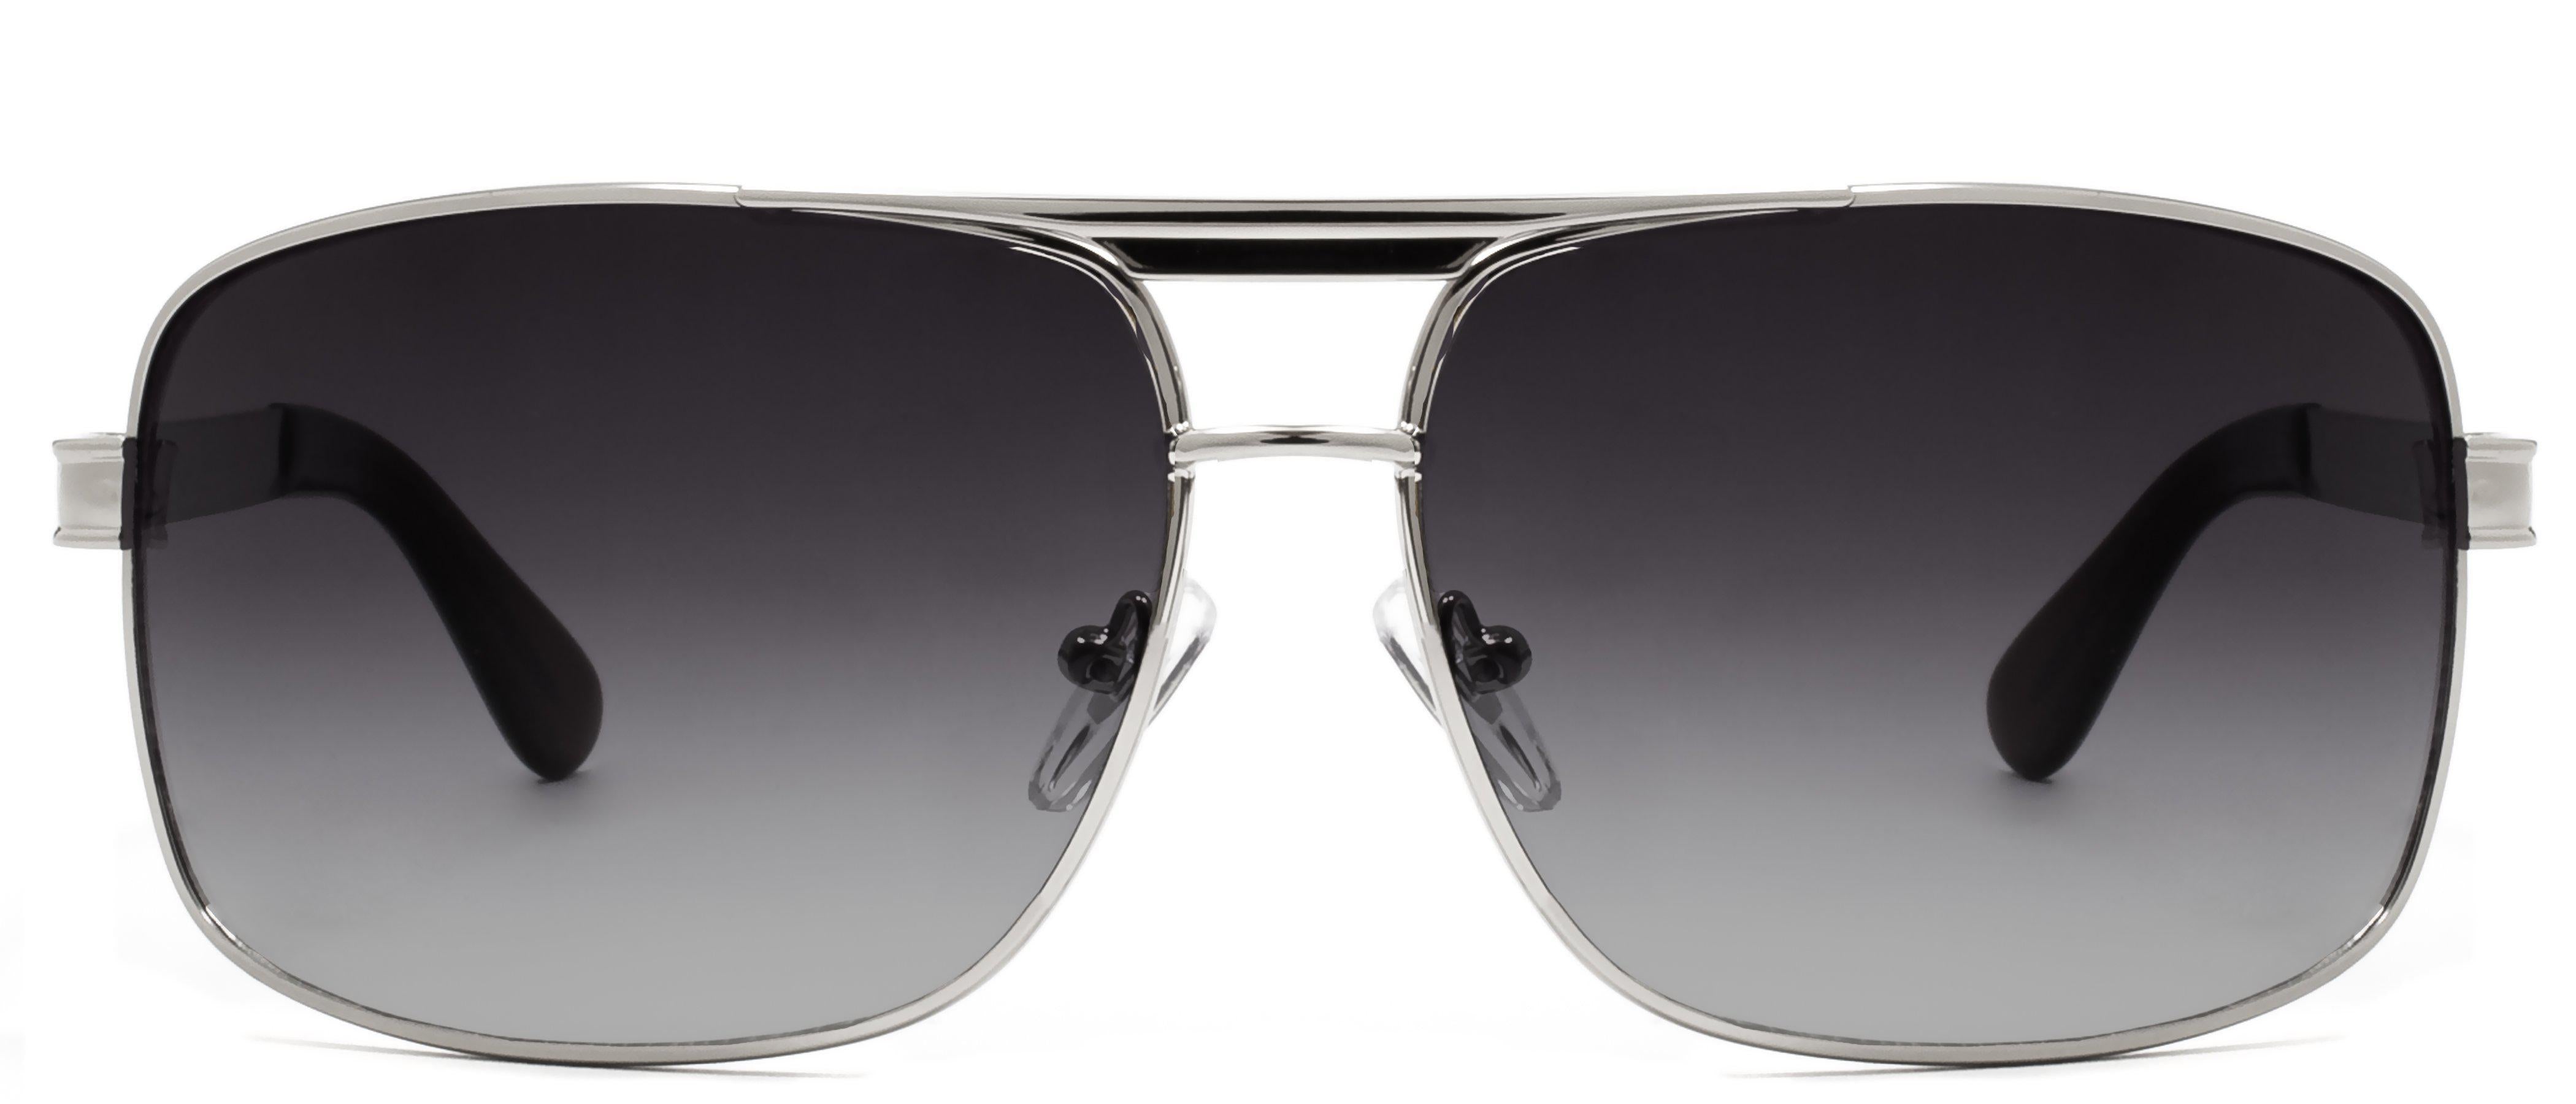 Details 162+ buy designer sunglasses online best